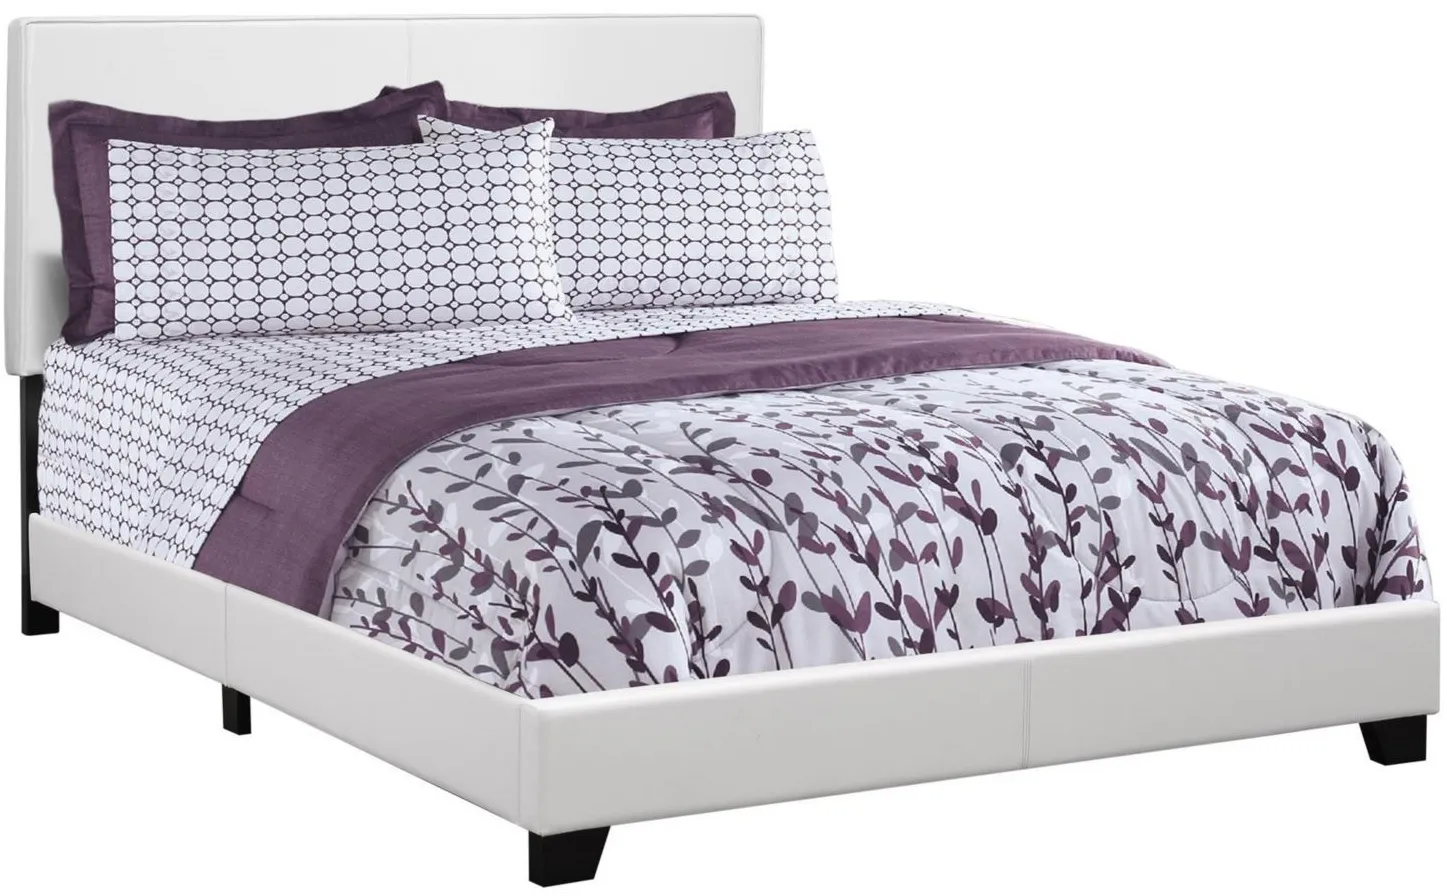 Monarch Specialties Queen Bed in White by Monarch Specialties